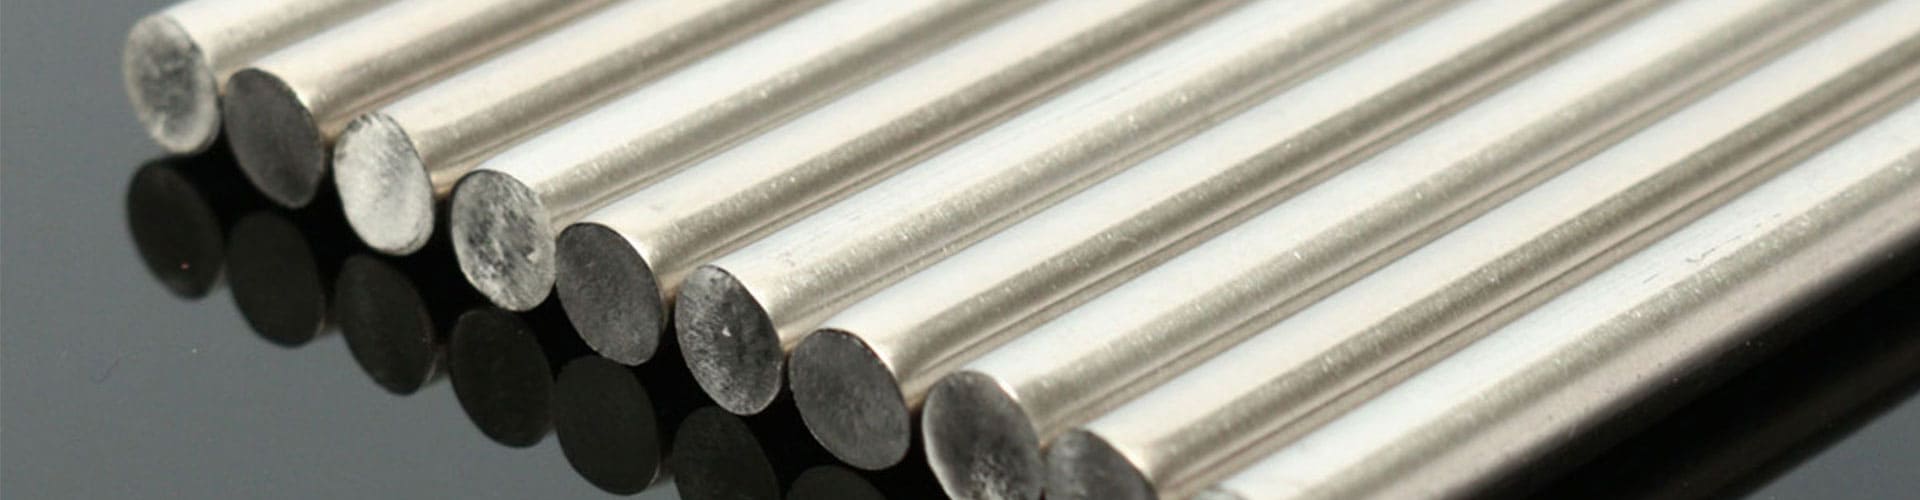 nickel-alloy-201-round-bars-rods-manufacturer-exporter-supplier-in-nigeria